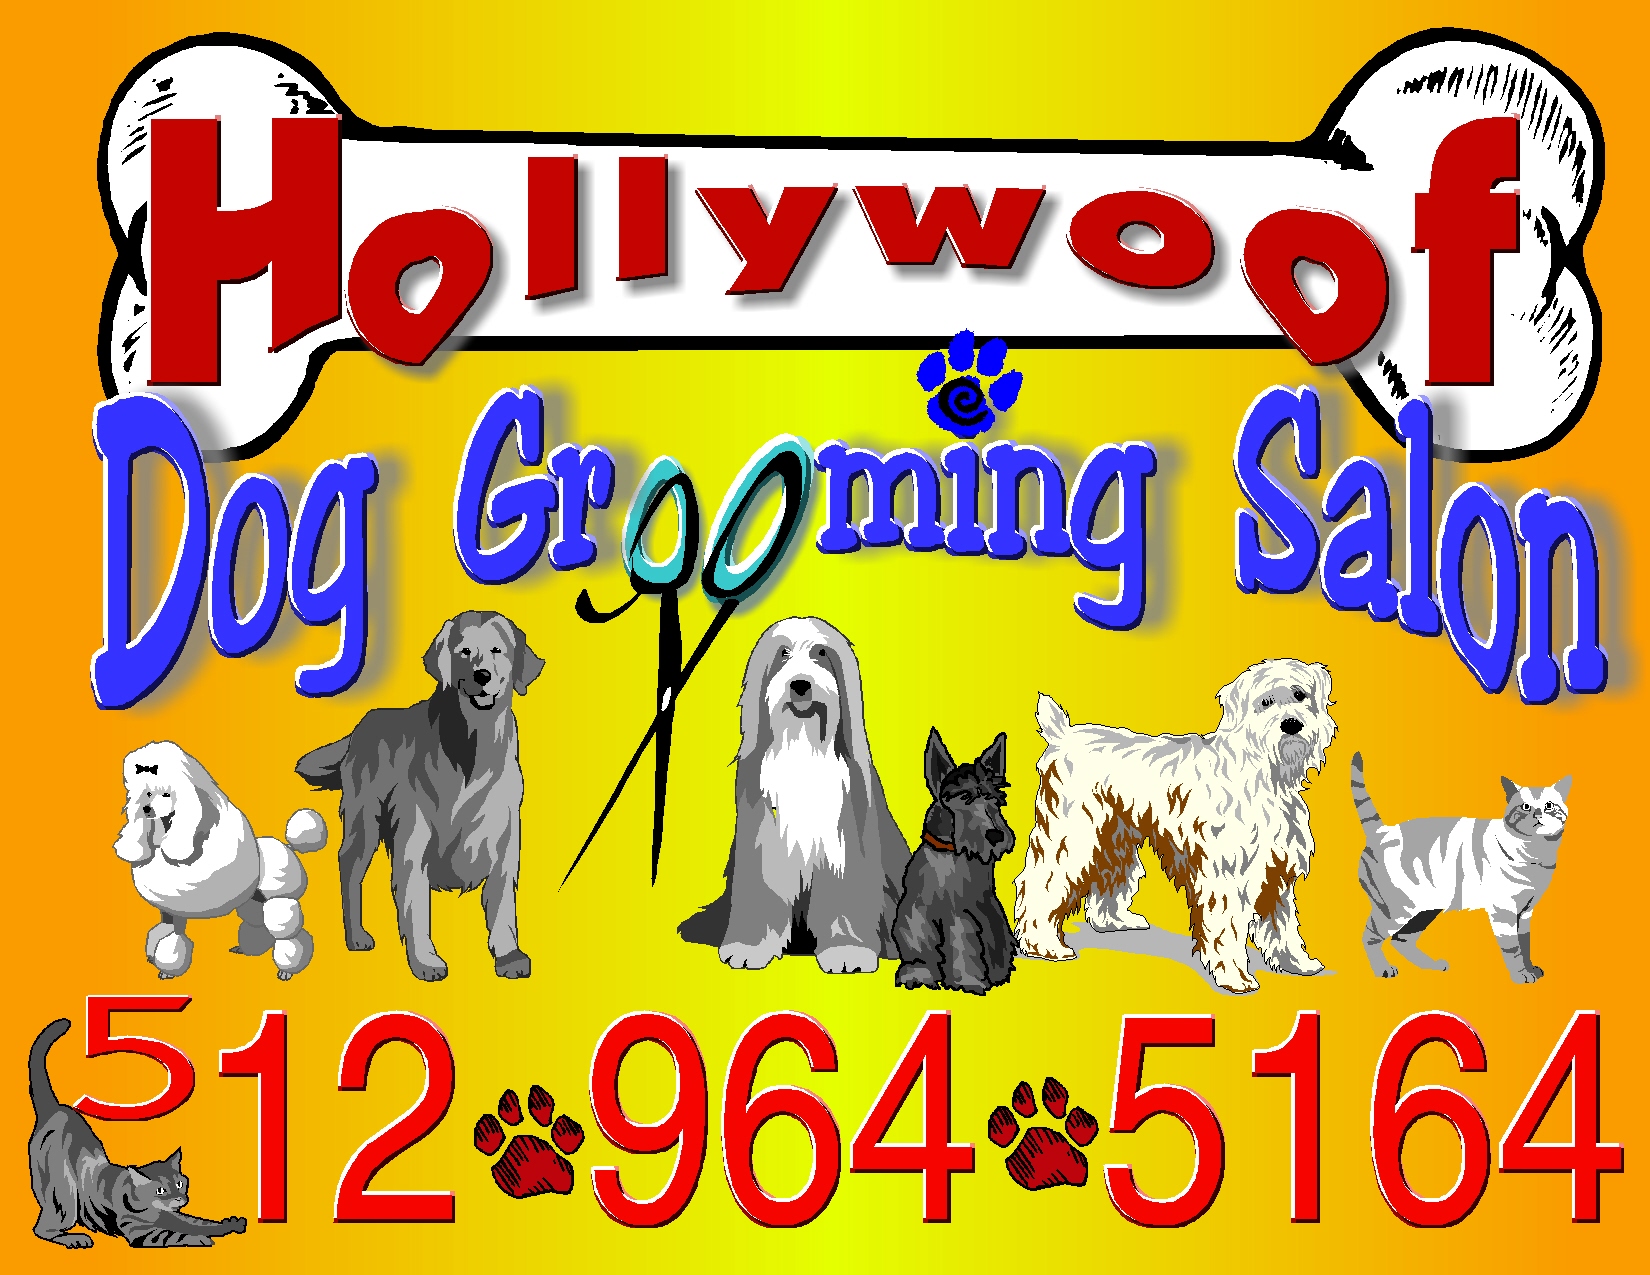 Hollywoof Pet Grooming Salon